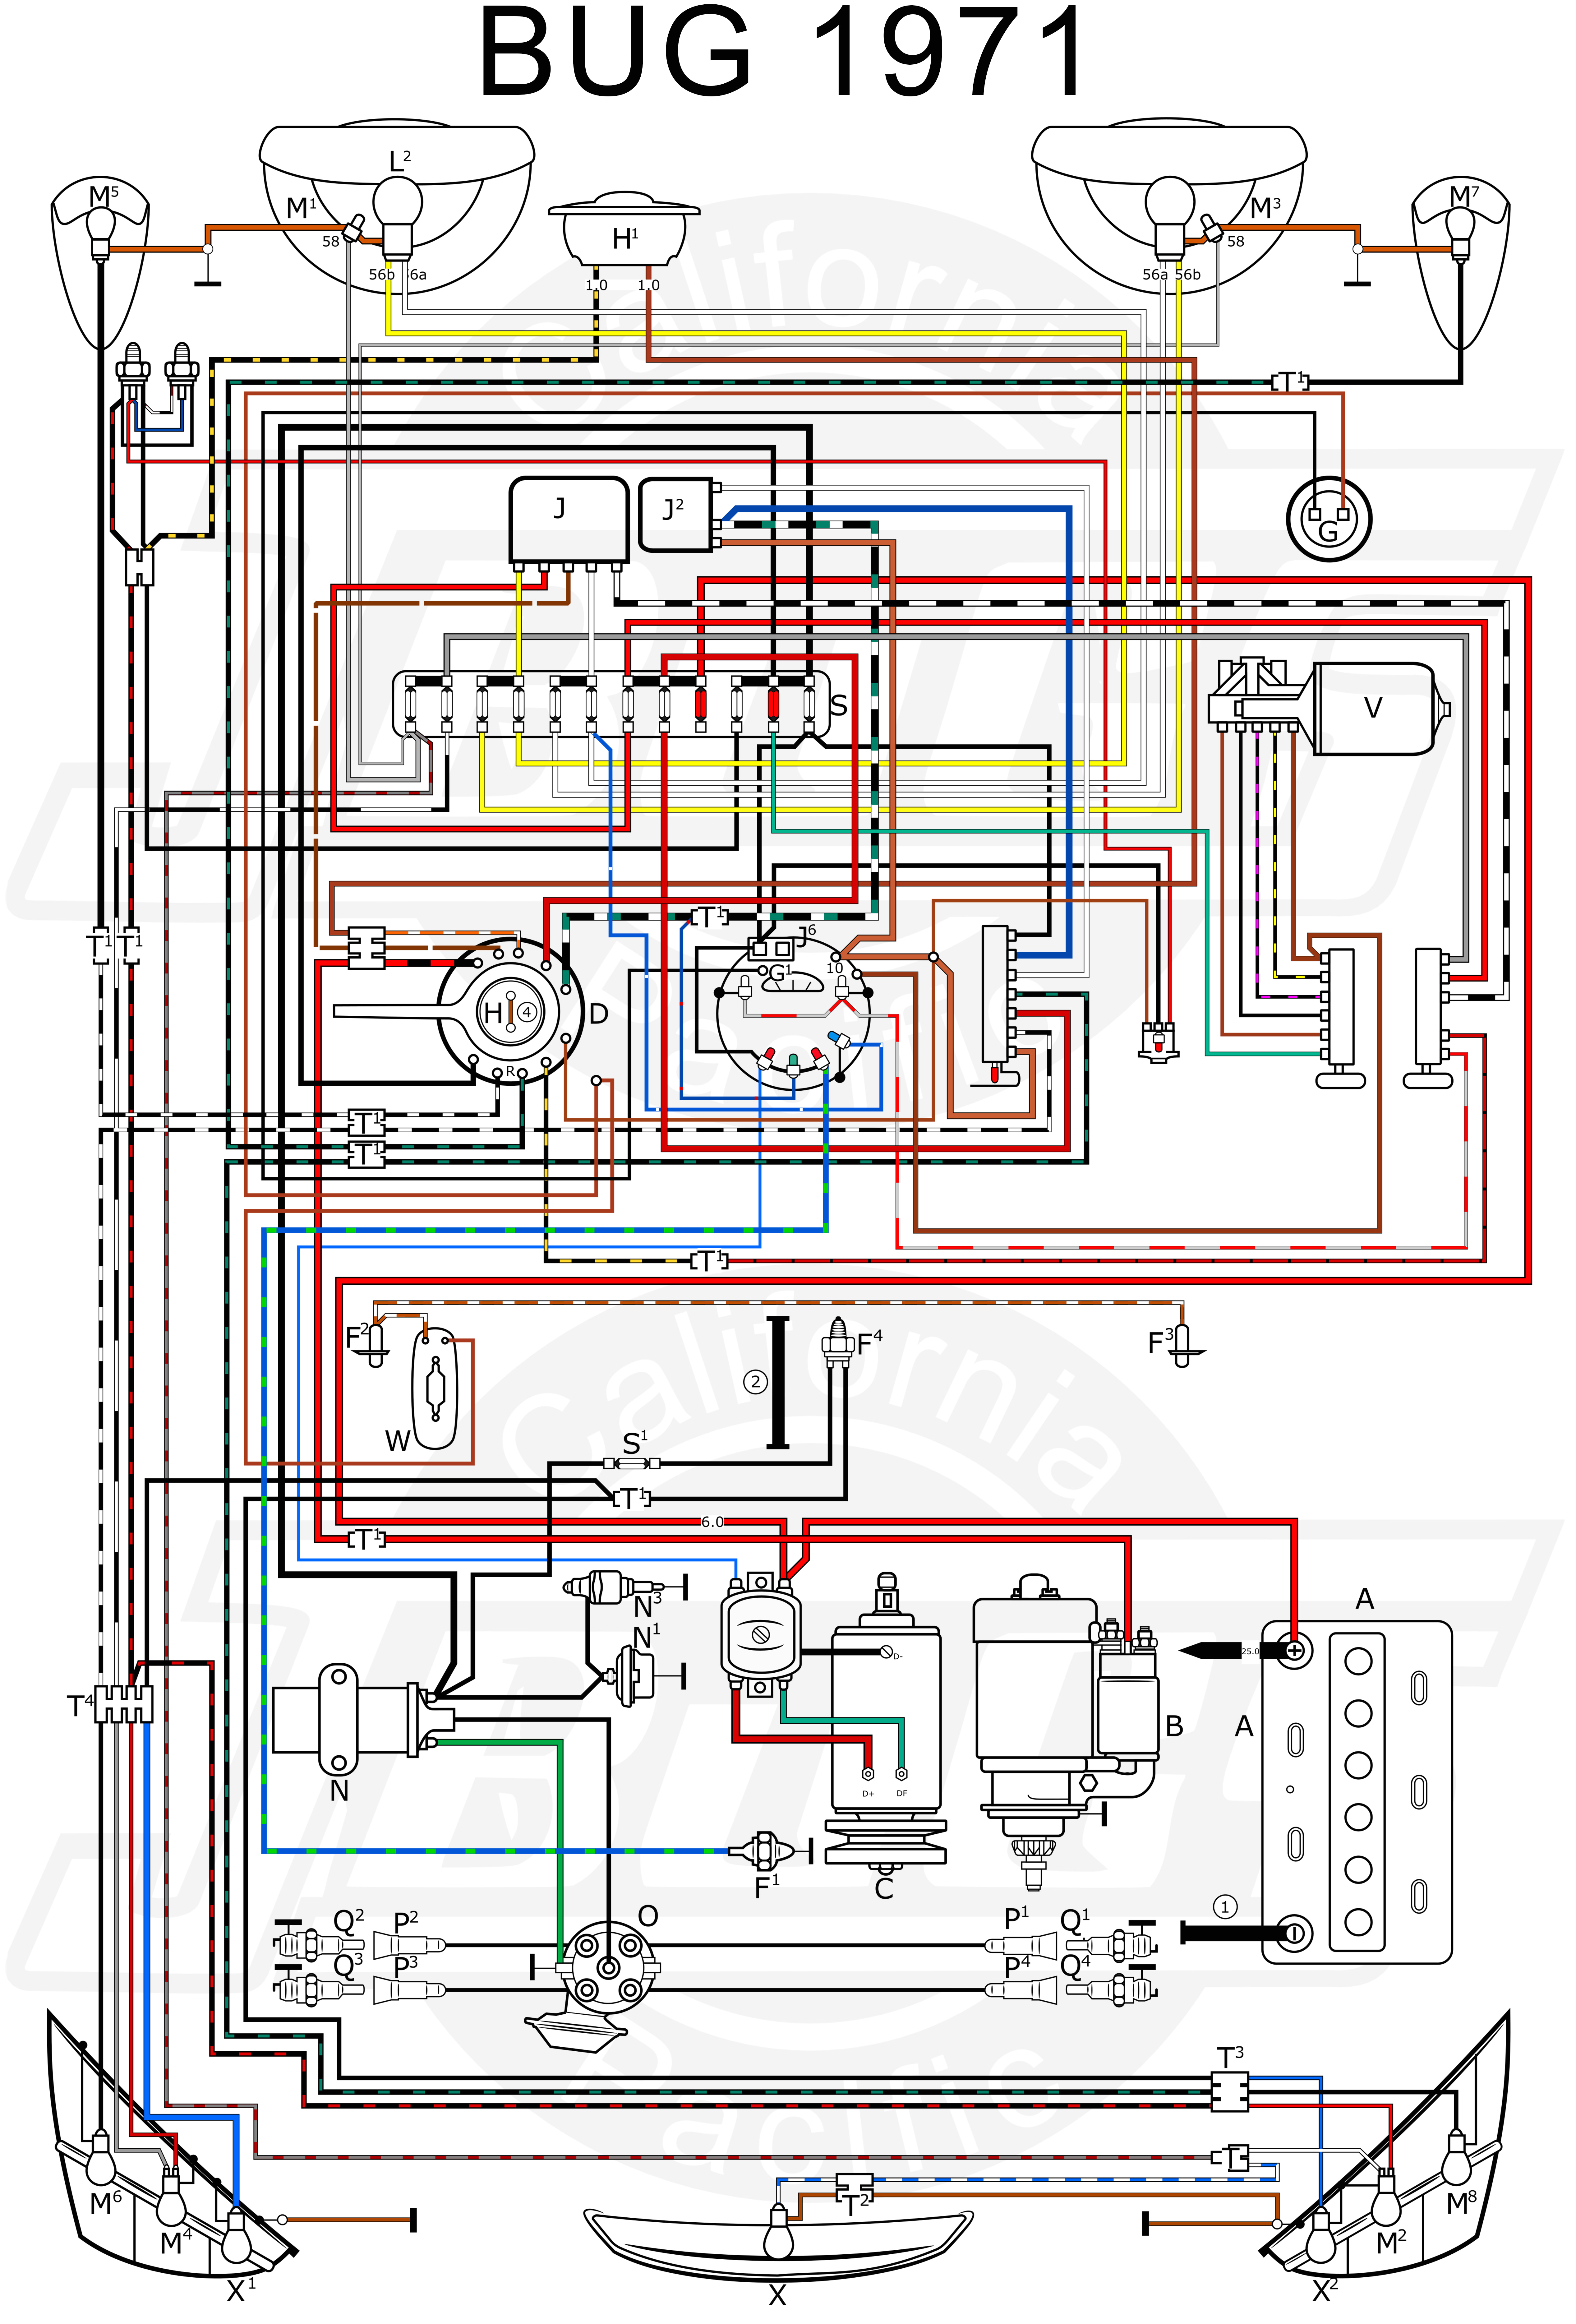 1970 bug wiring diagram wiring diagramwiring diagram vw beetle wiring diagram show mix 1971 vw bug